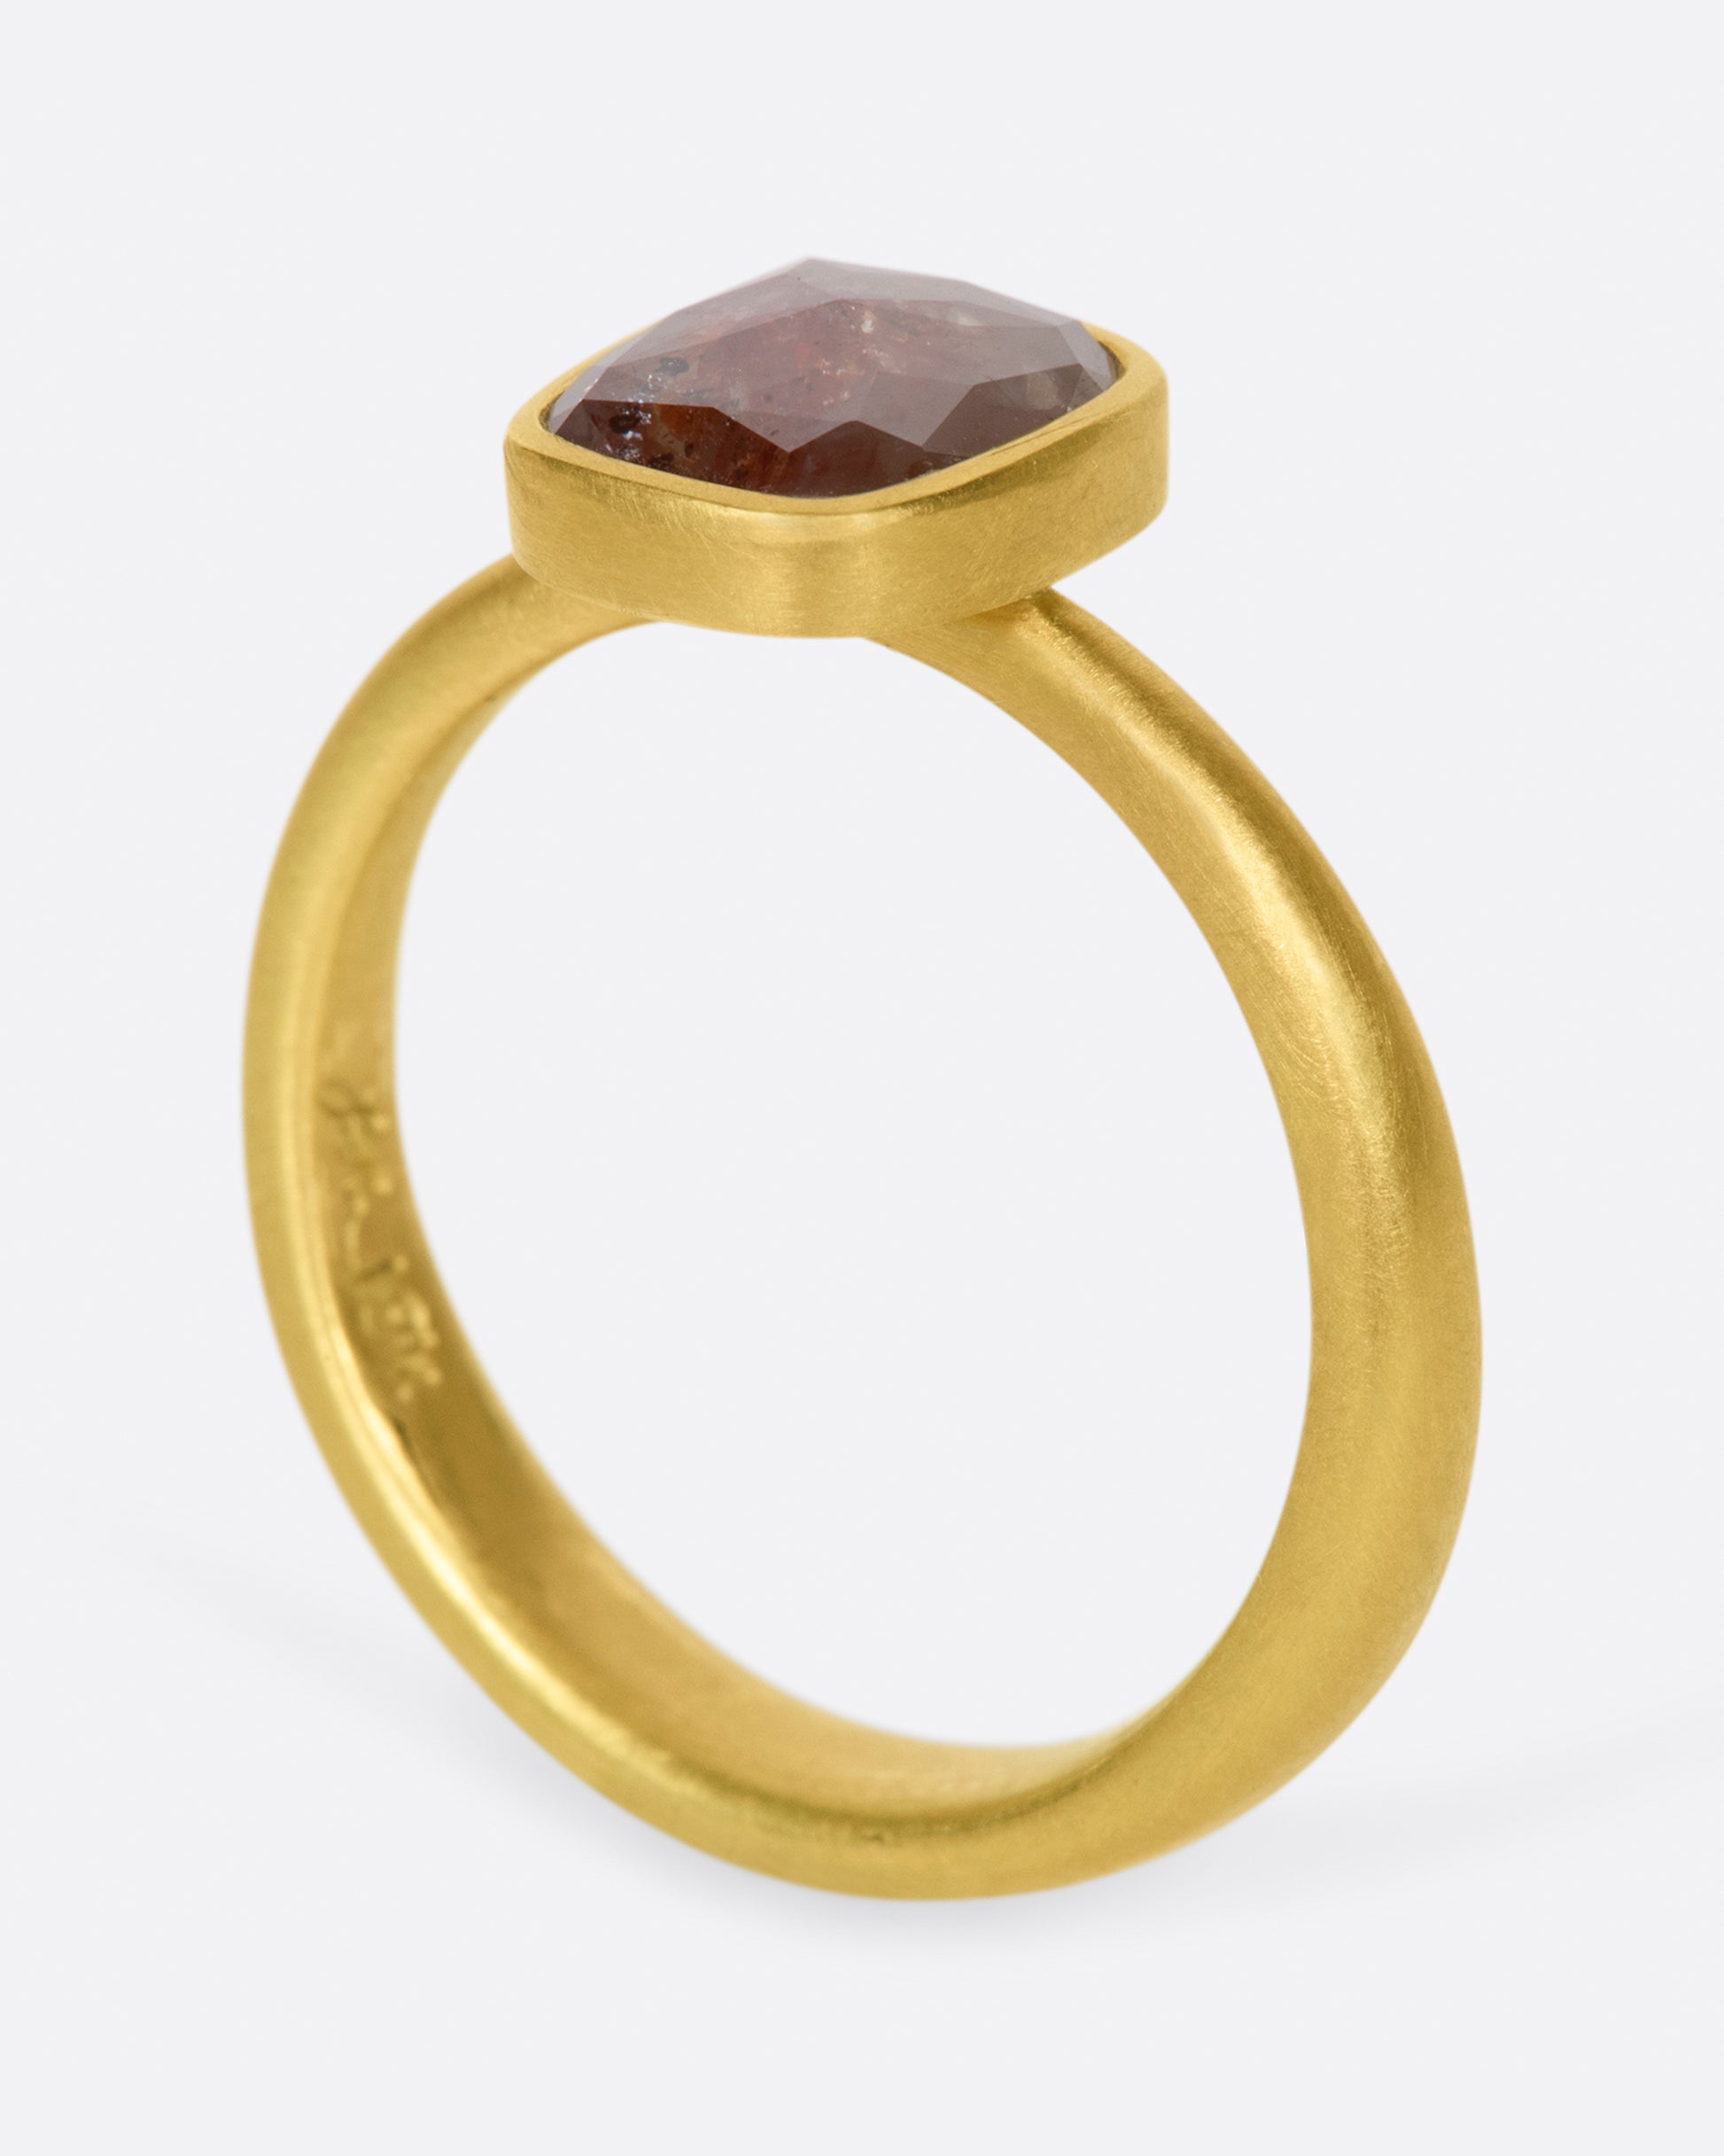 A cushion shaped, rusty-red diamond in one of Lola Brooks' signature bezel settings.